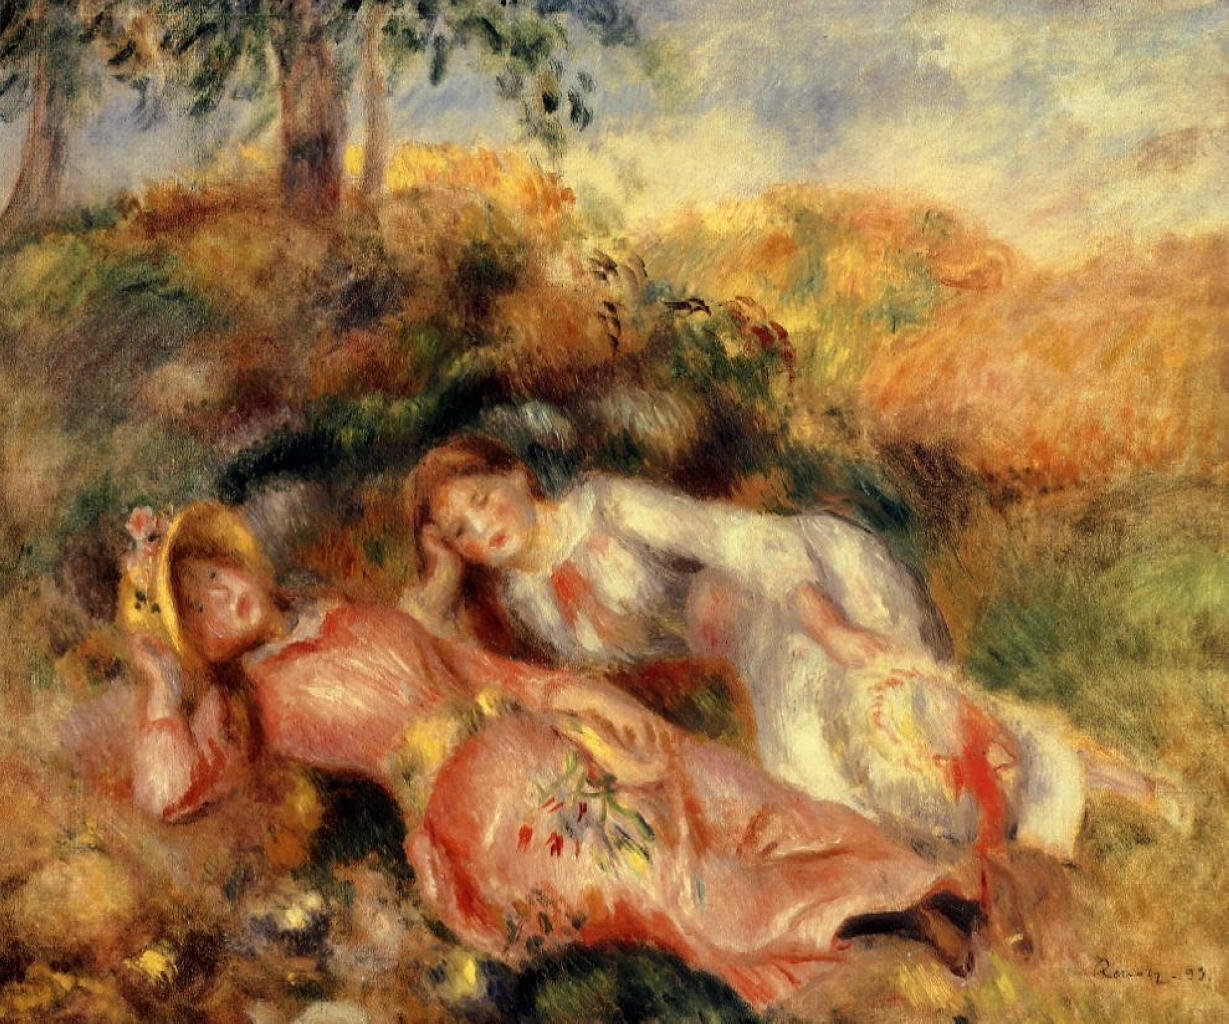 Reclining Women - Pierre-Auguste Renoir painting on canvas